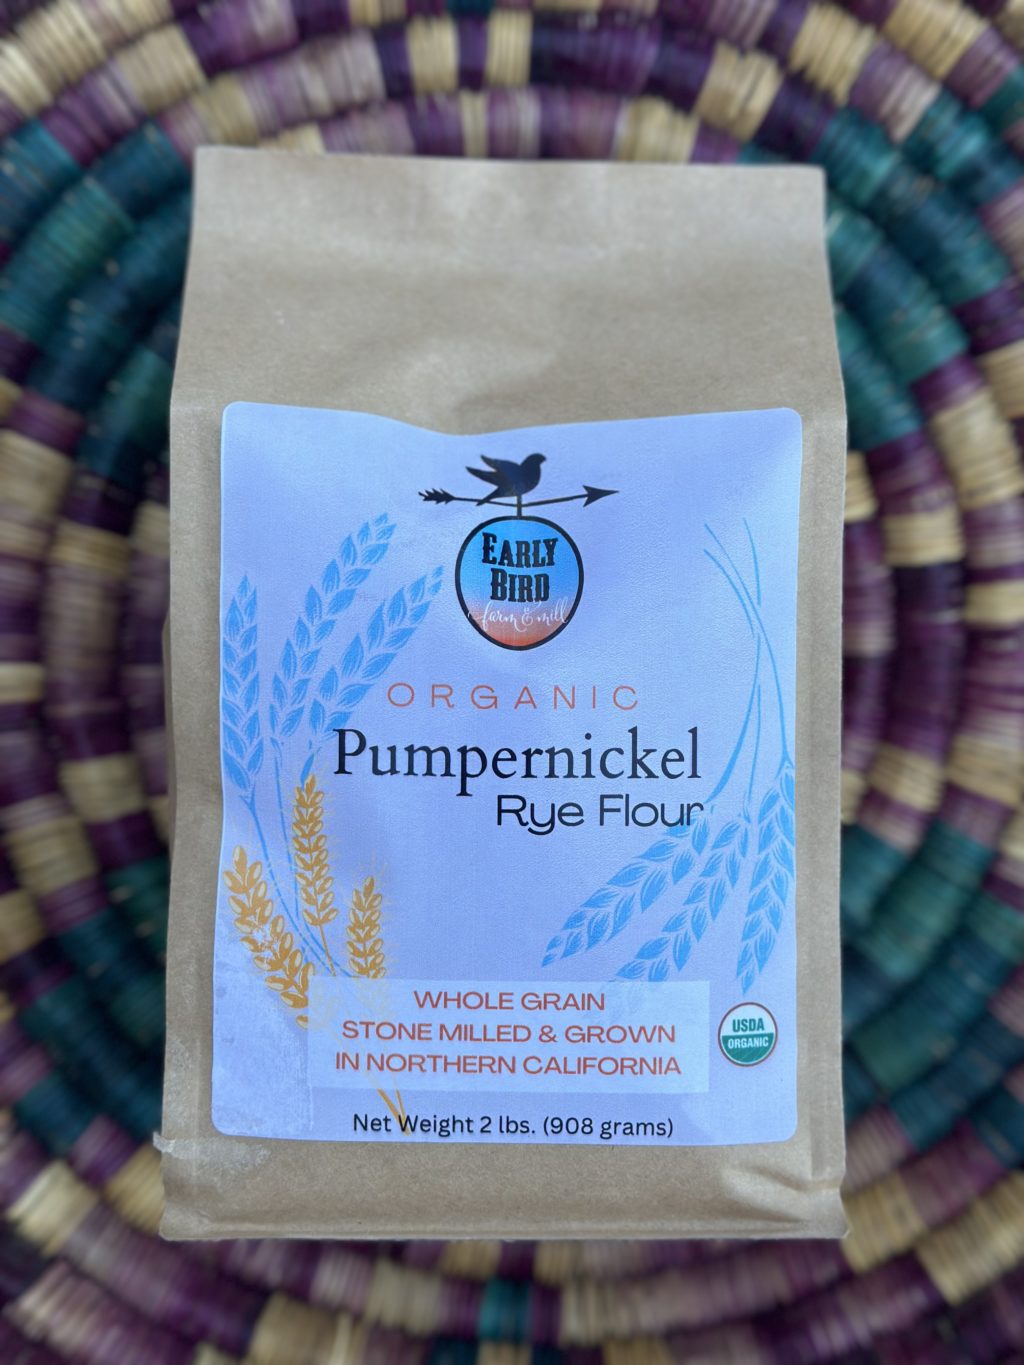 Early Bird Farm & Mill Pumpernickel Rye Flour Bag in Basket